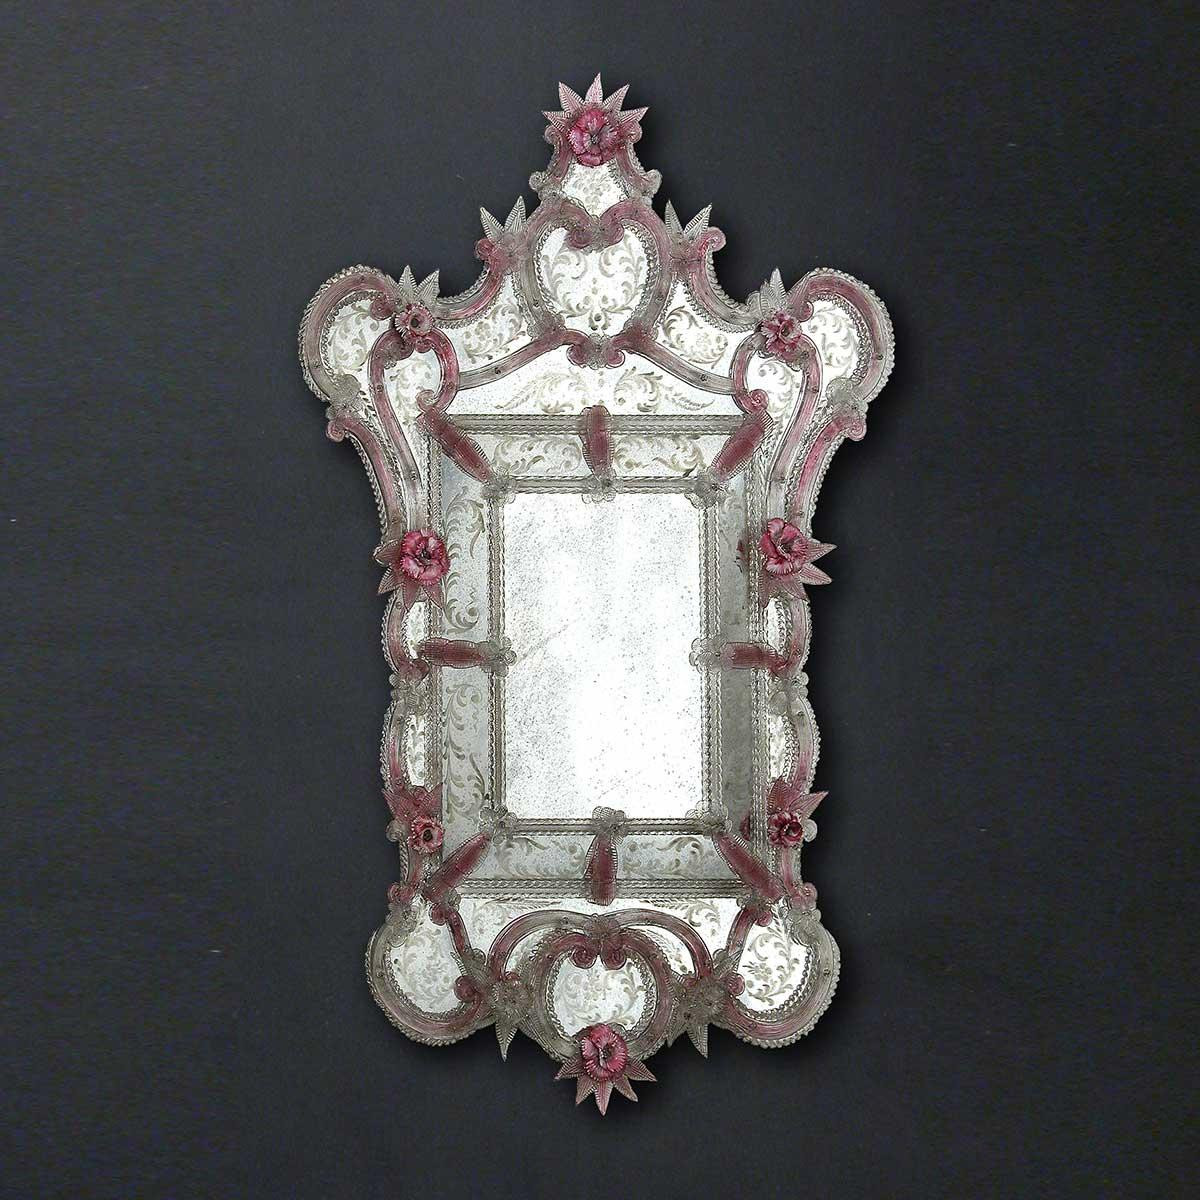 "Sofia" Murano glas venezianischen spiegel